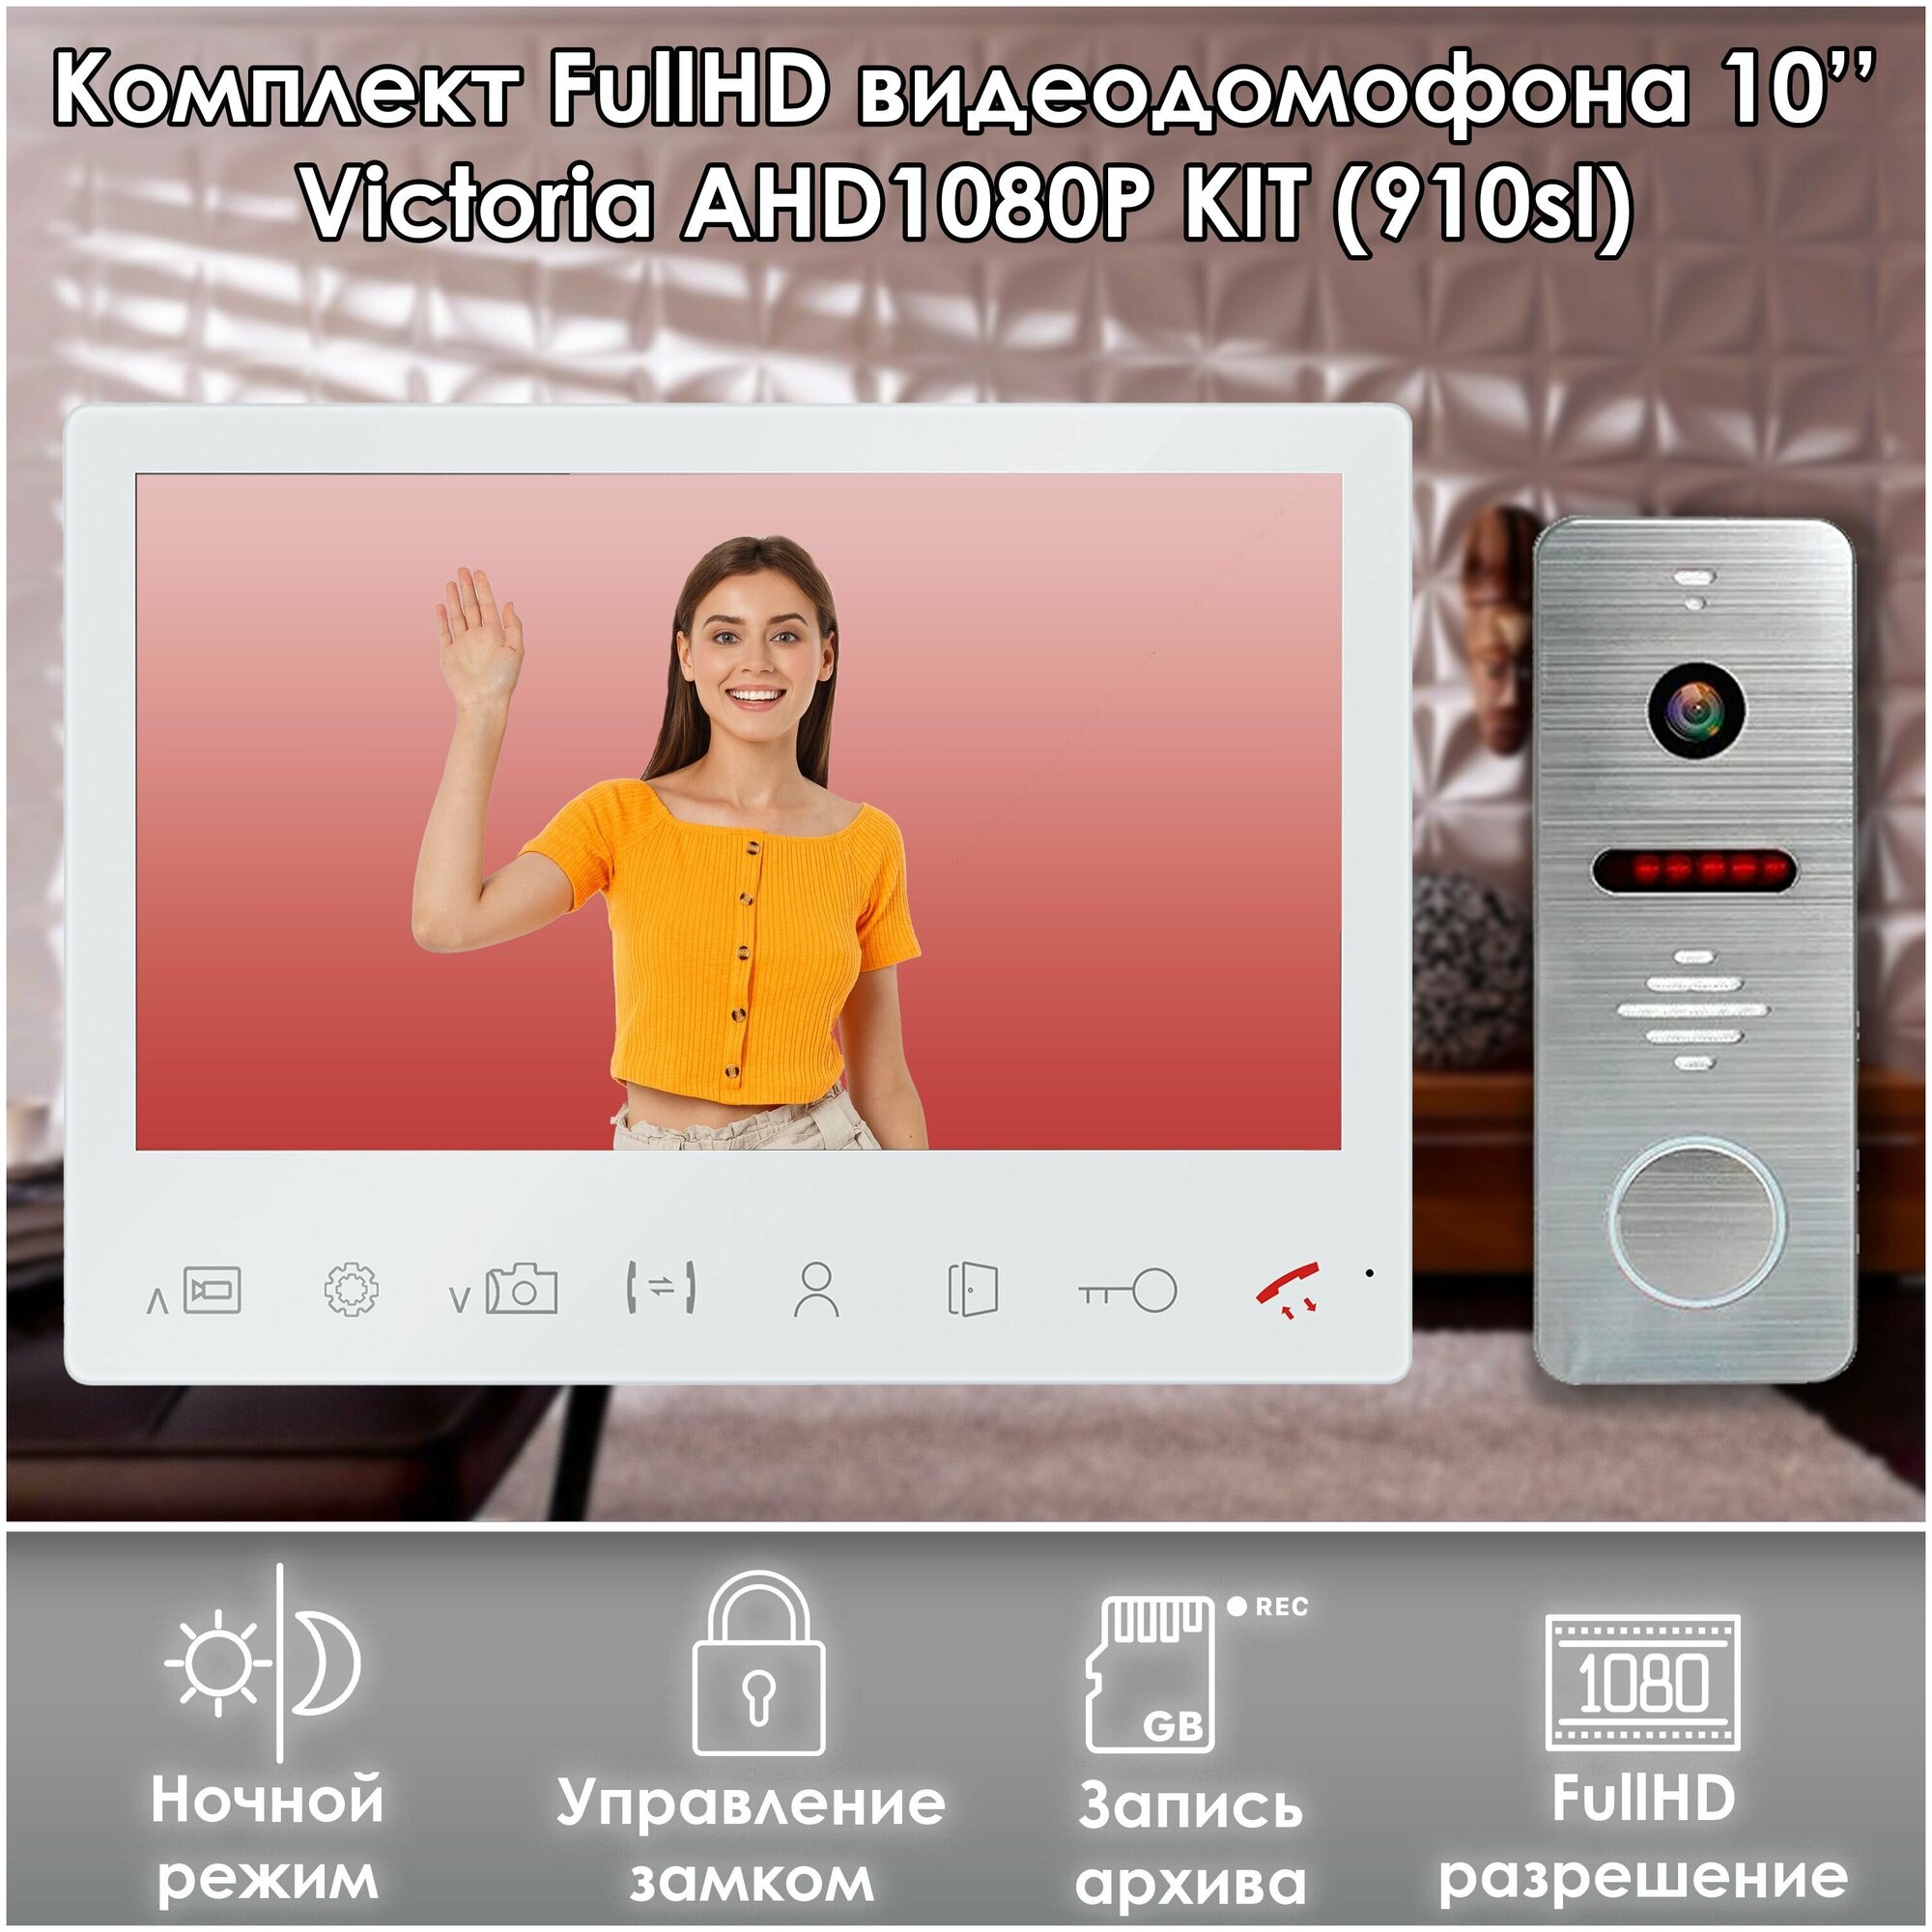 Комплект видеодомофона VICTORIA-KIT (910sl) Full HD 10 дюймов, / в квартиру / для частного дома